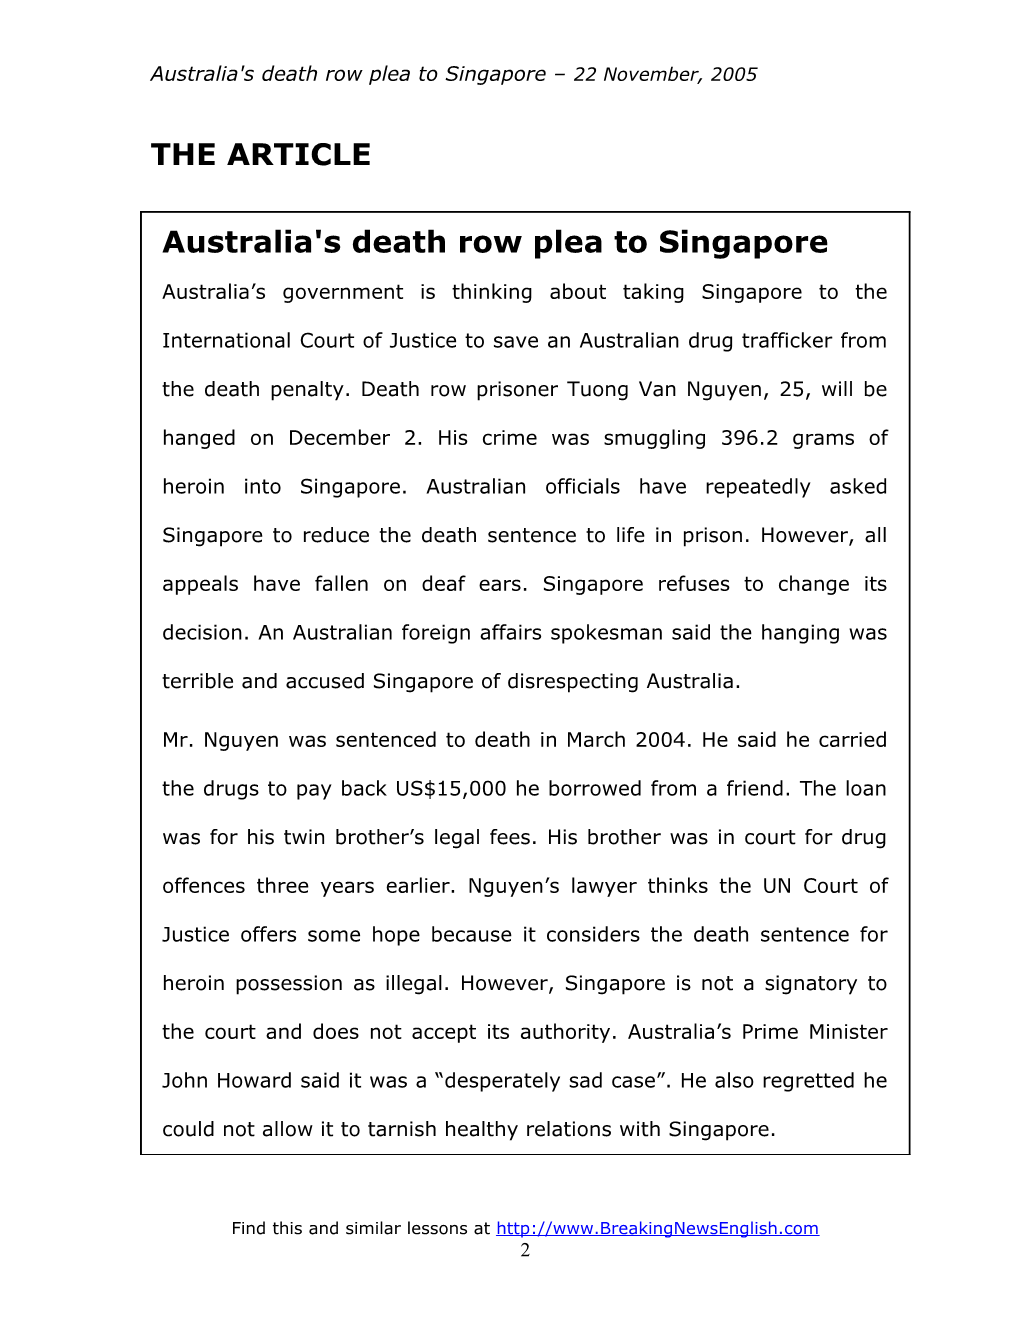 Australia's Death Row Plea to Singapore